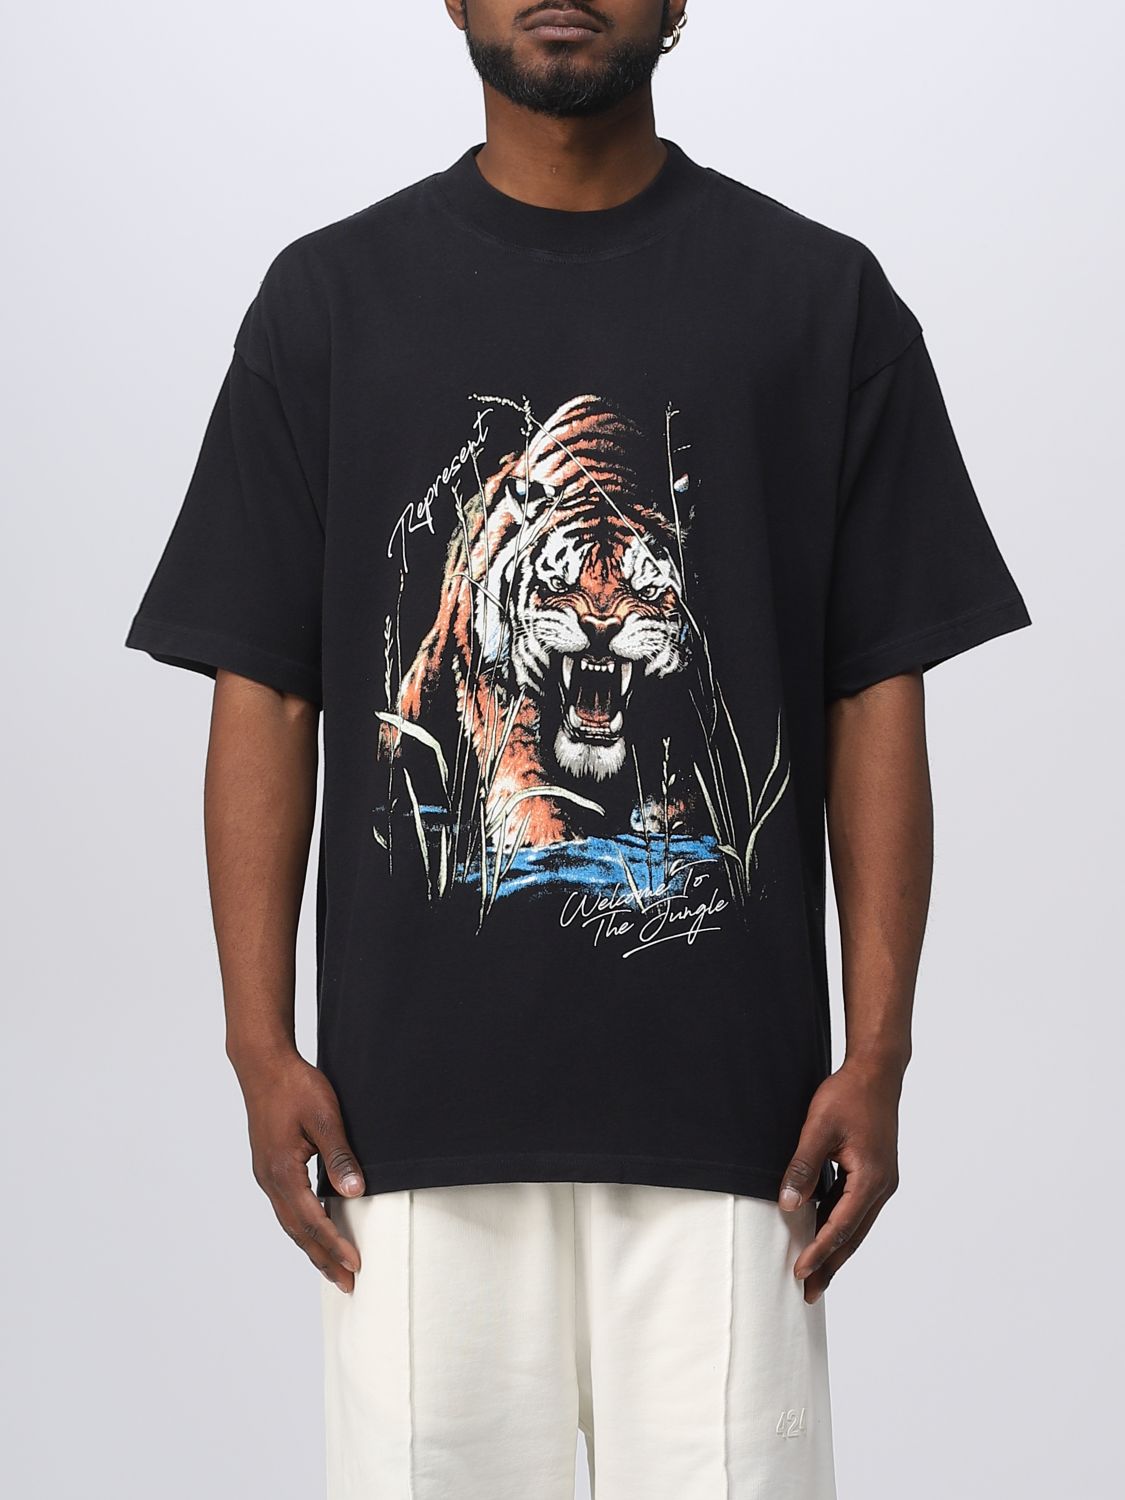 REPRESENT: t-shirt for man - Black | Represent t-shirt M05235 online at ...